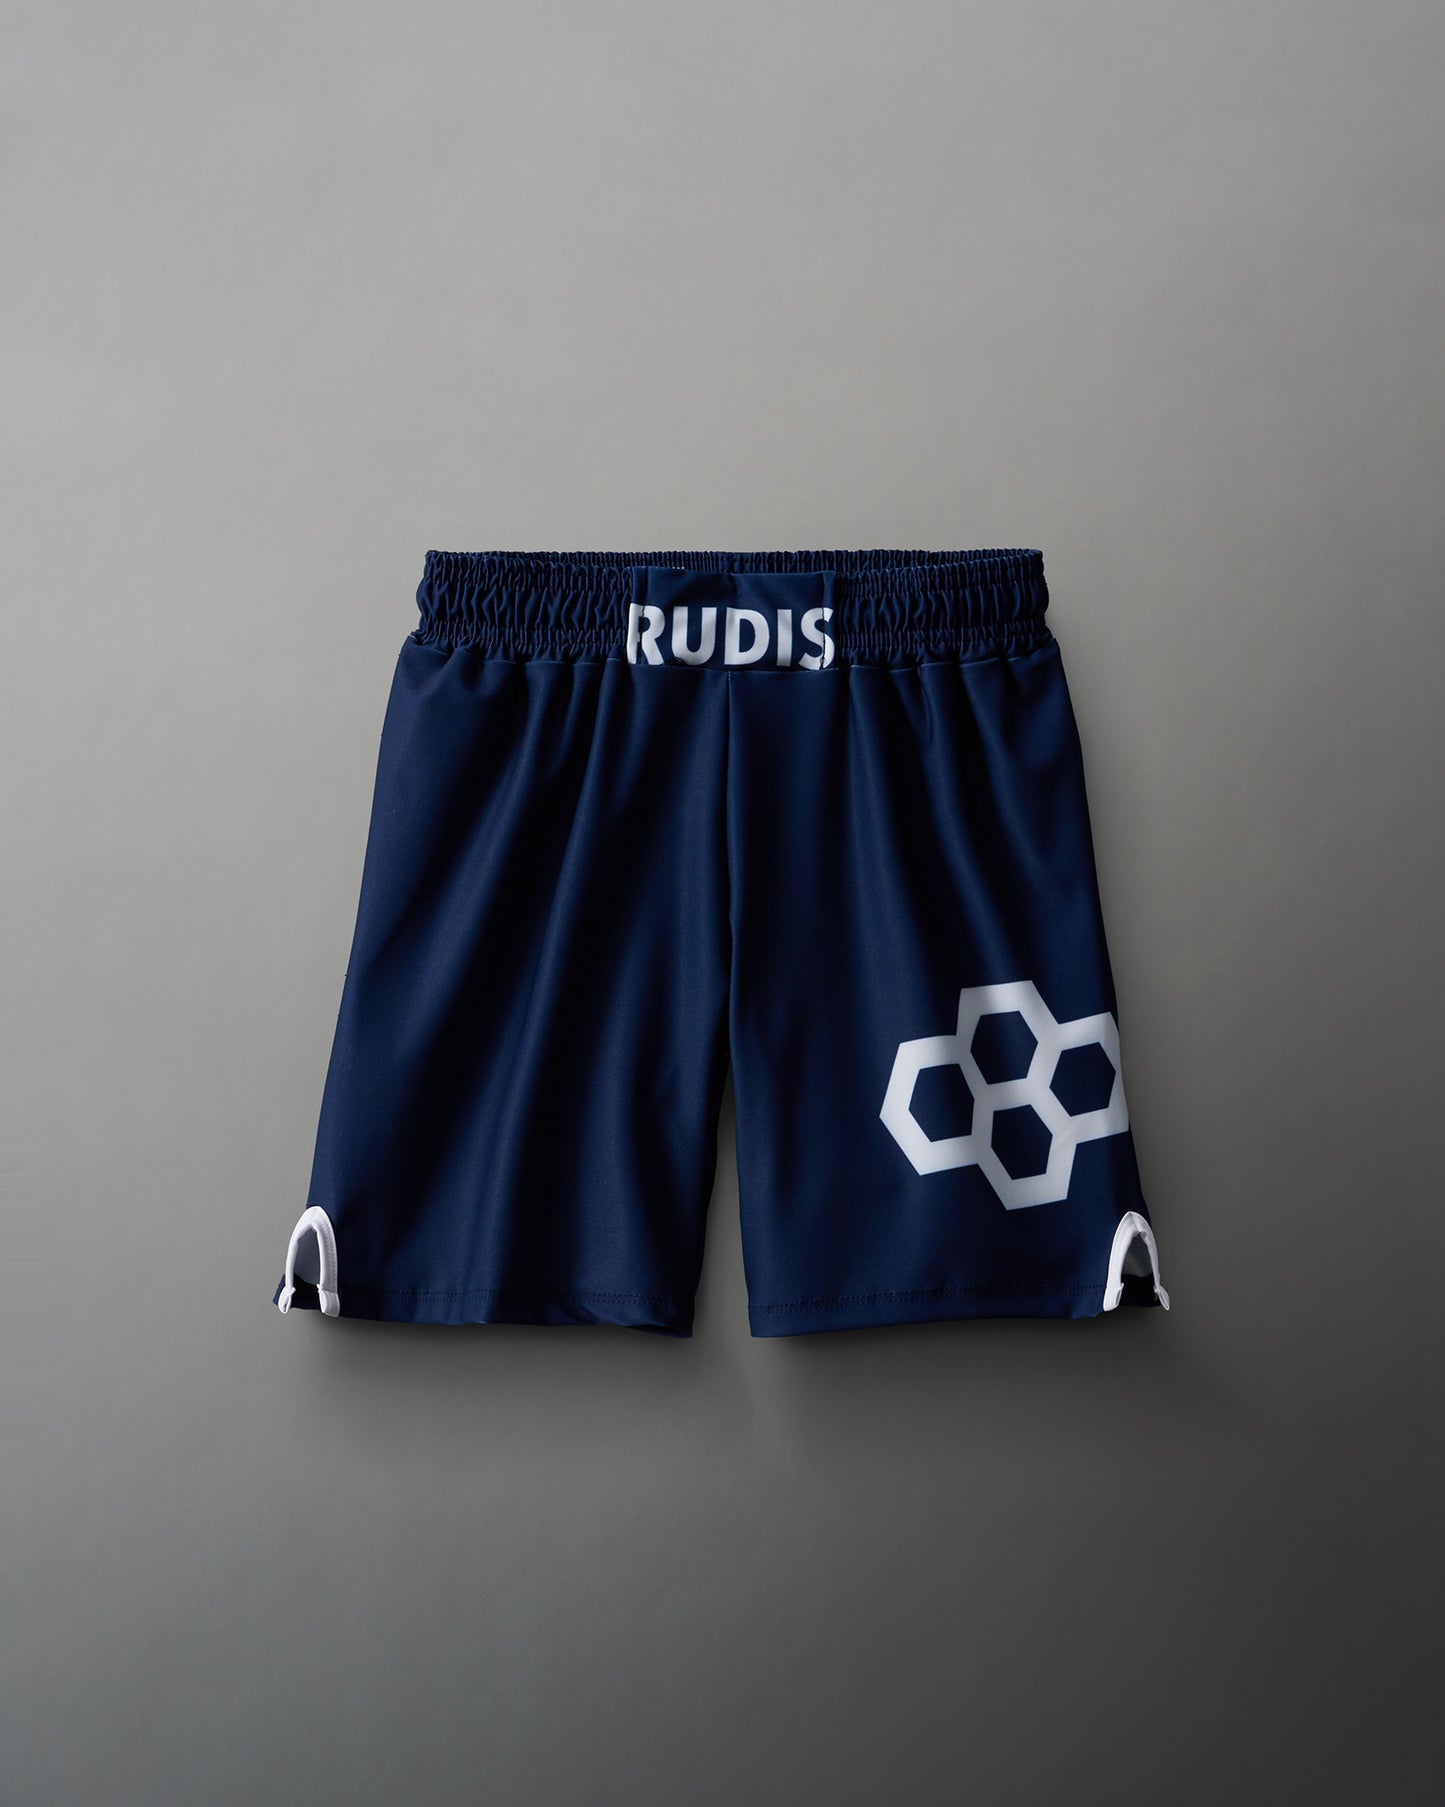 RUDIS Throwdown Youth Elite Wrestling Shorts